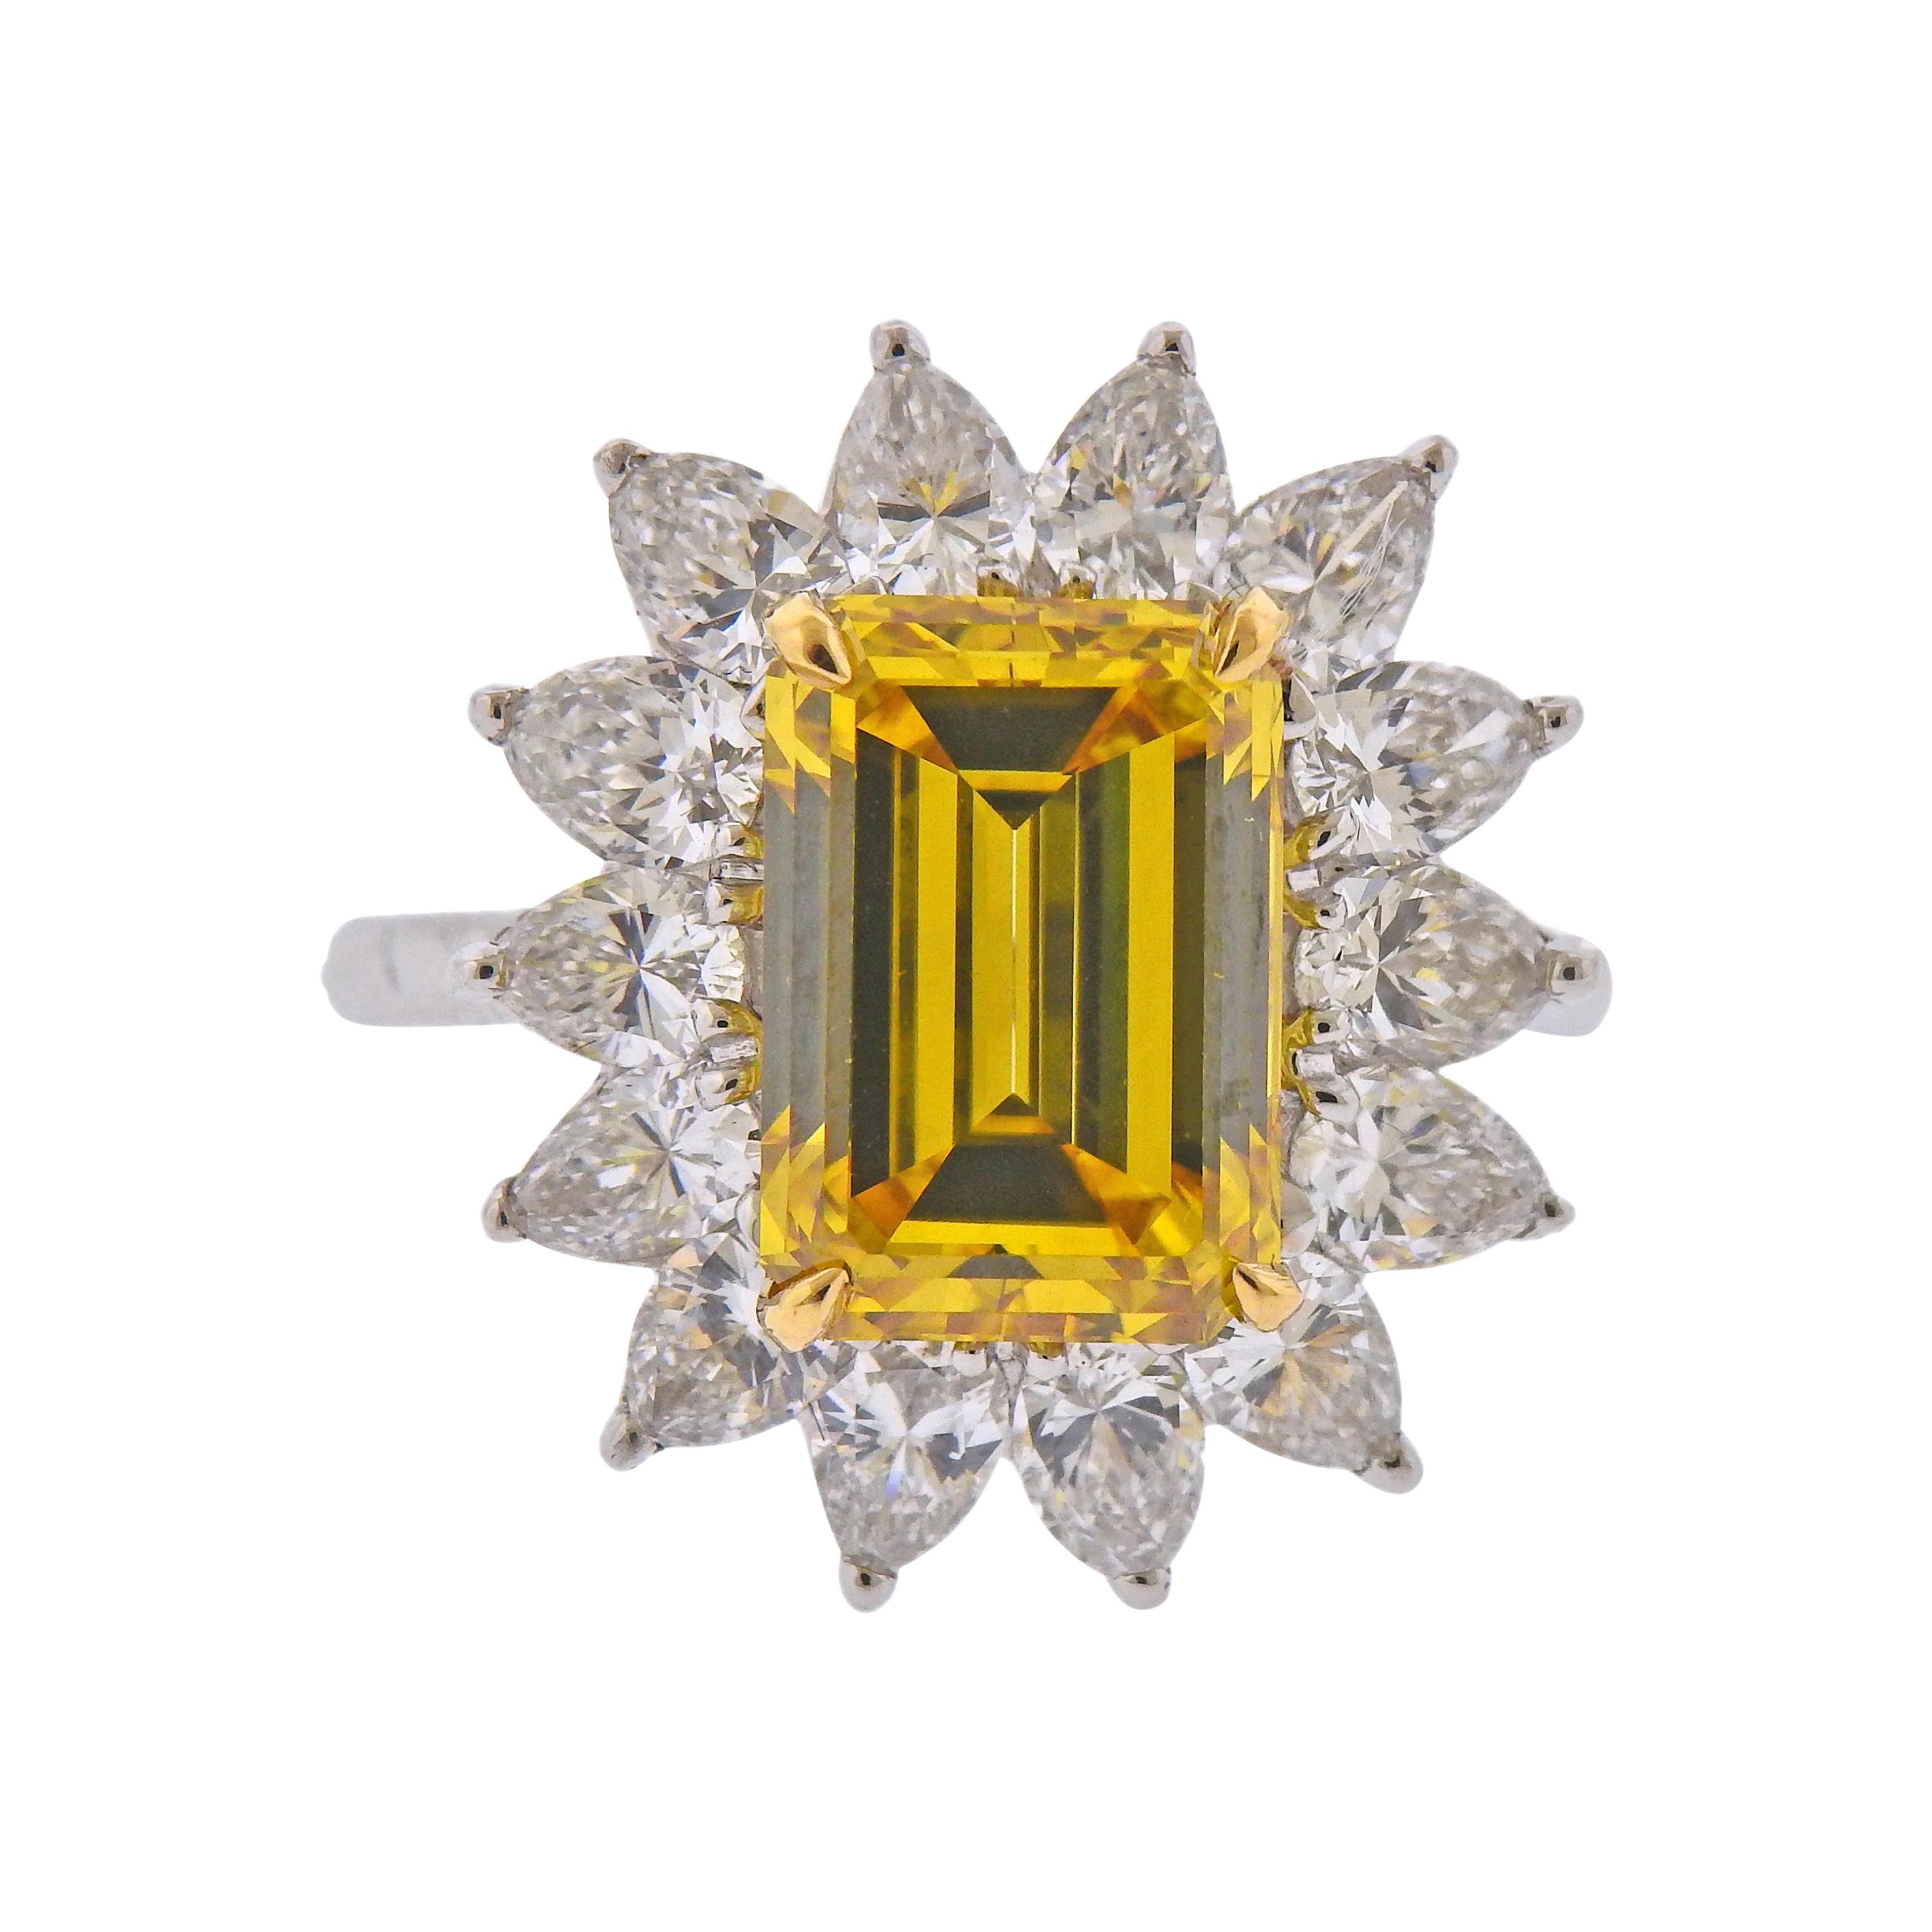 GIA 5.23 Carat Fancy Vivid Yellow VS2 Emerald Cut Diamond Engagement Ring